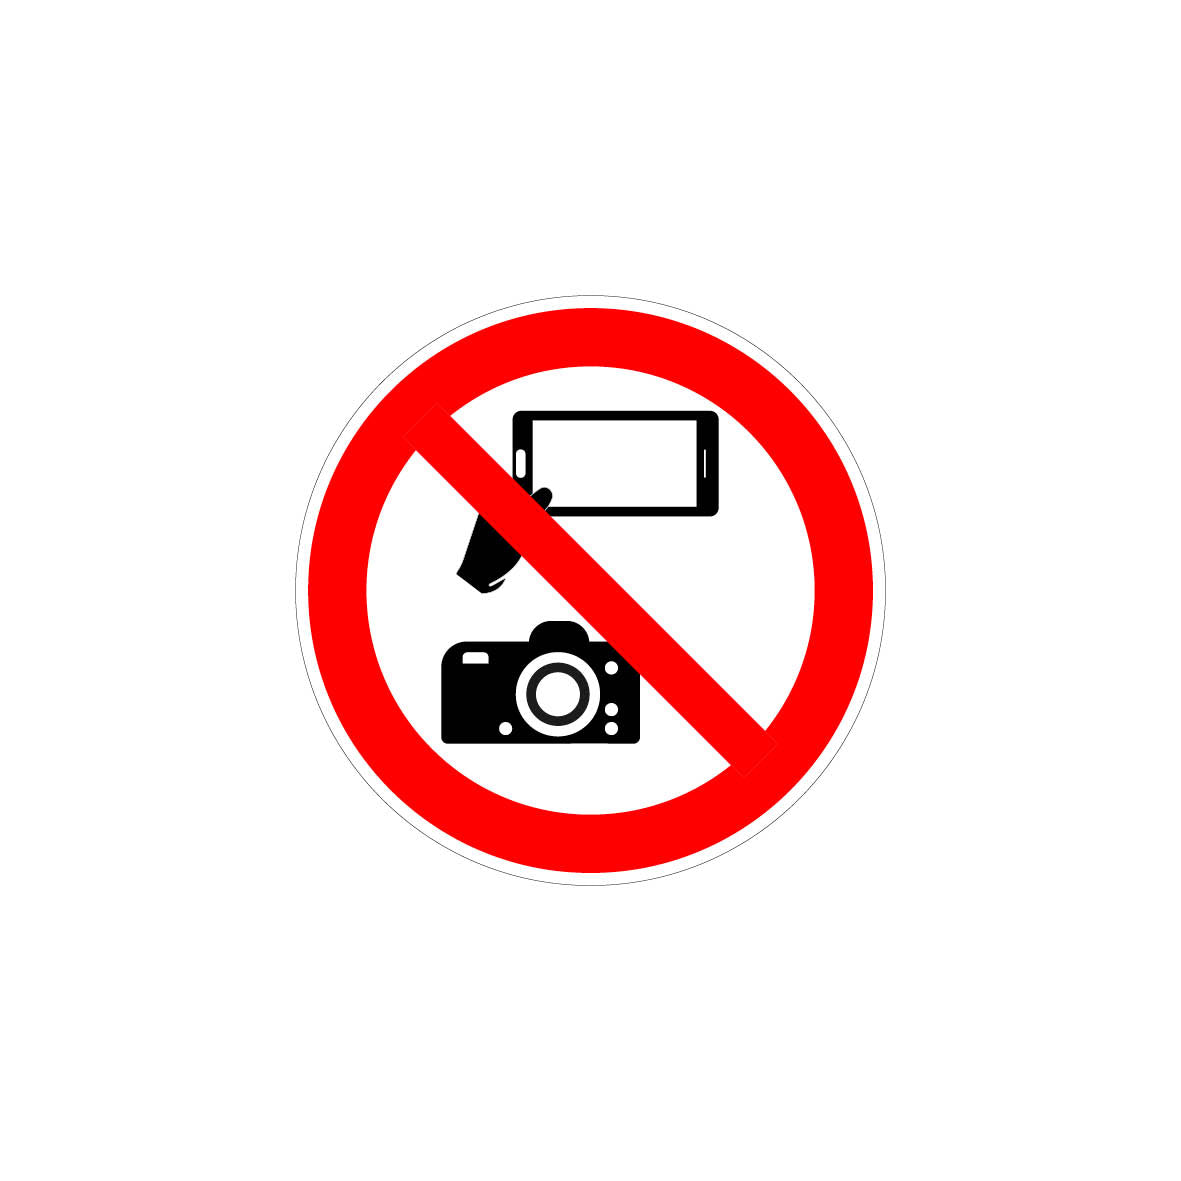 6.V-986 Fotografieren verboten Handy, Verbotszeichen, praxisbewährt